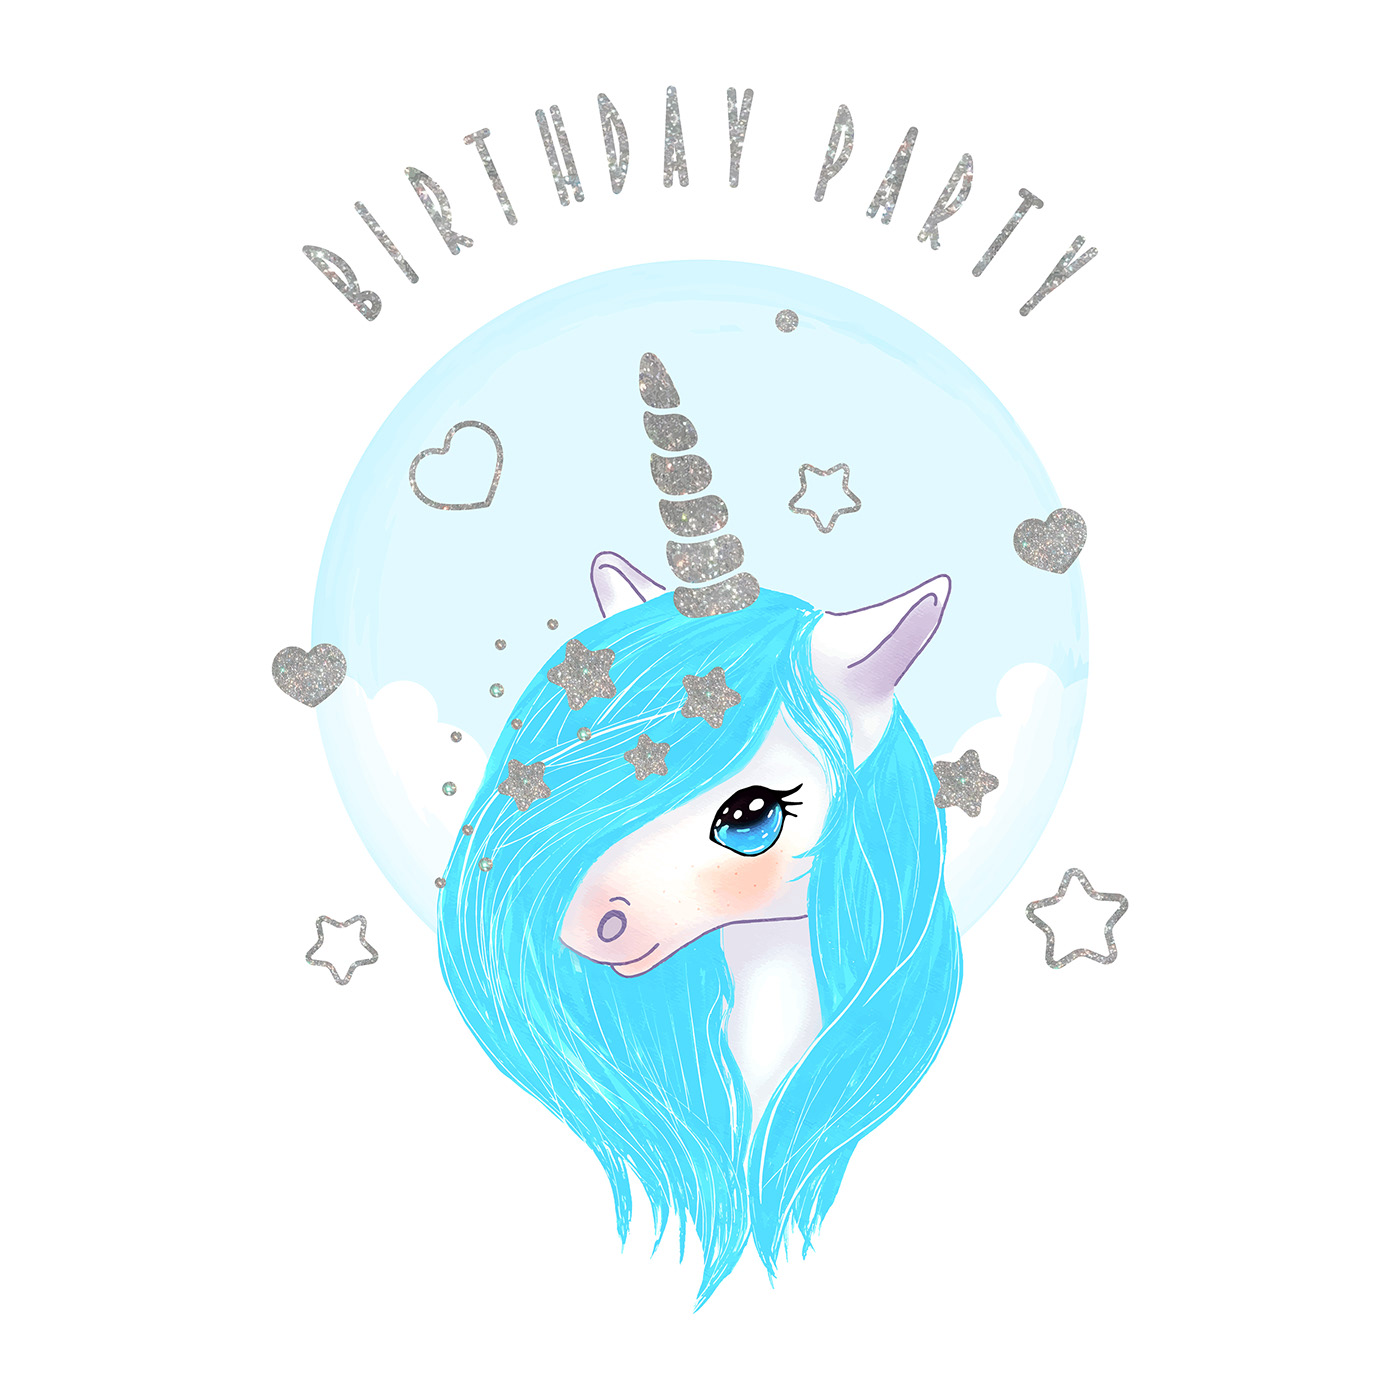 unicorns fantasy invitations design birthday party watercolour art ILLUSTRATION 